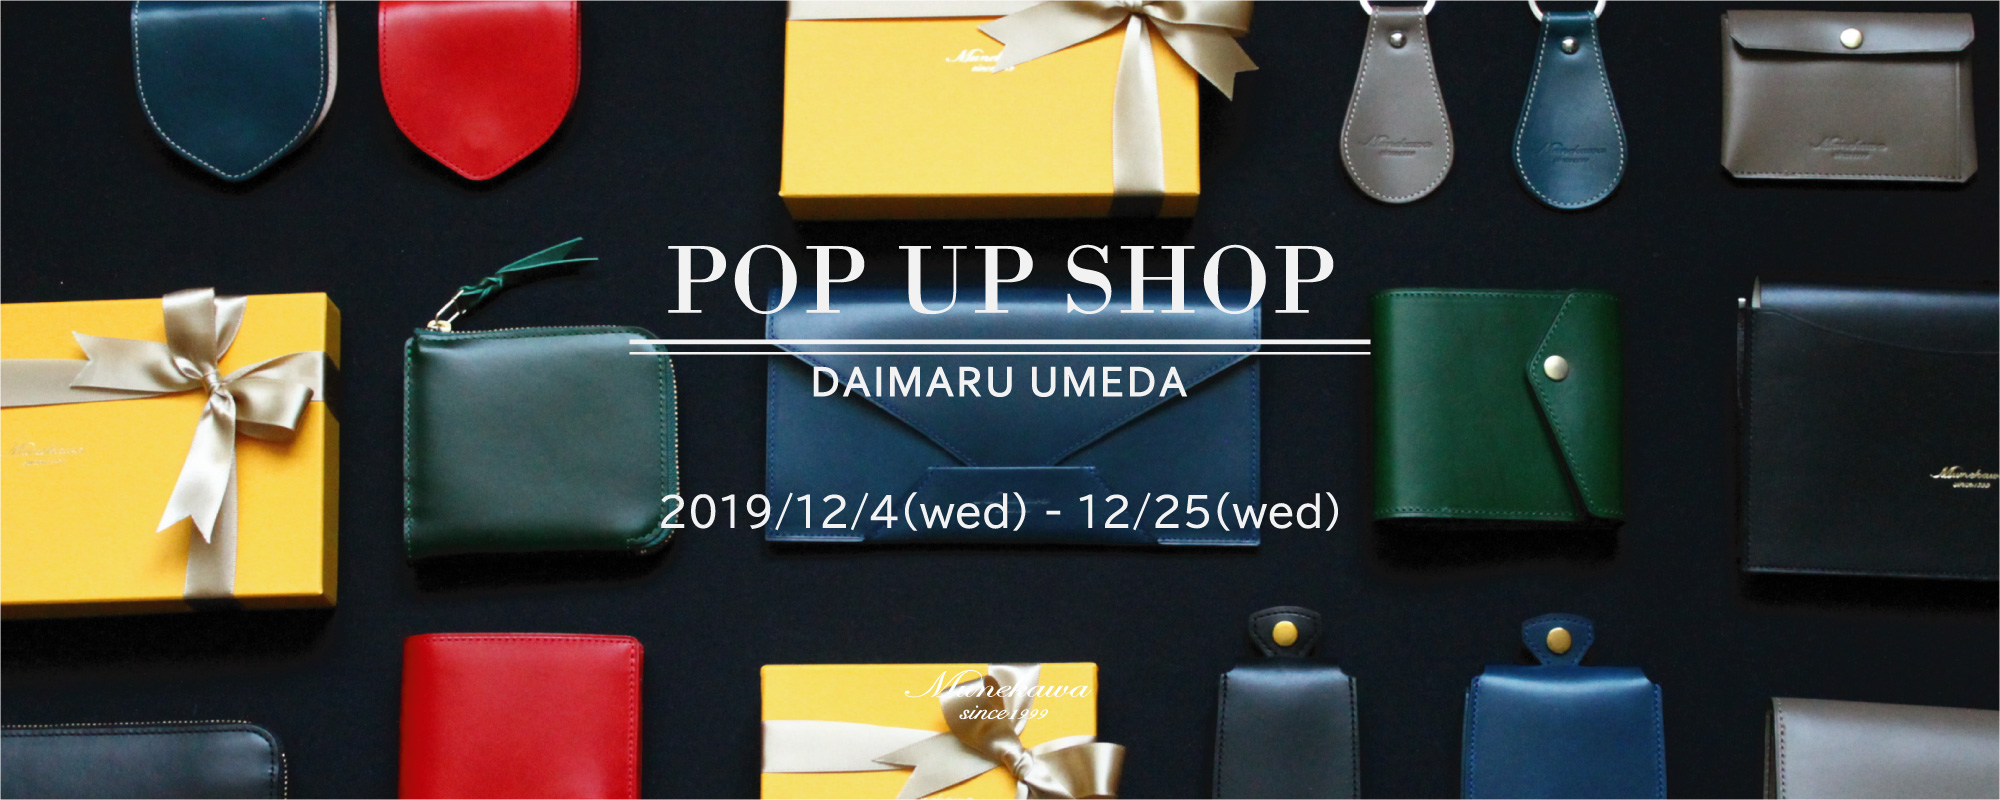 Munekawa POP UP SHOP@大丸梅田店